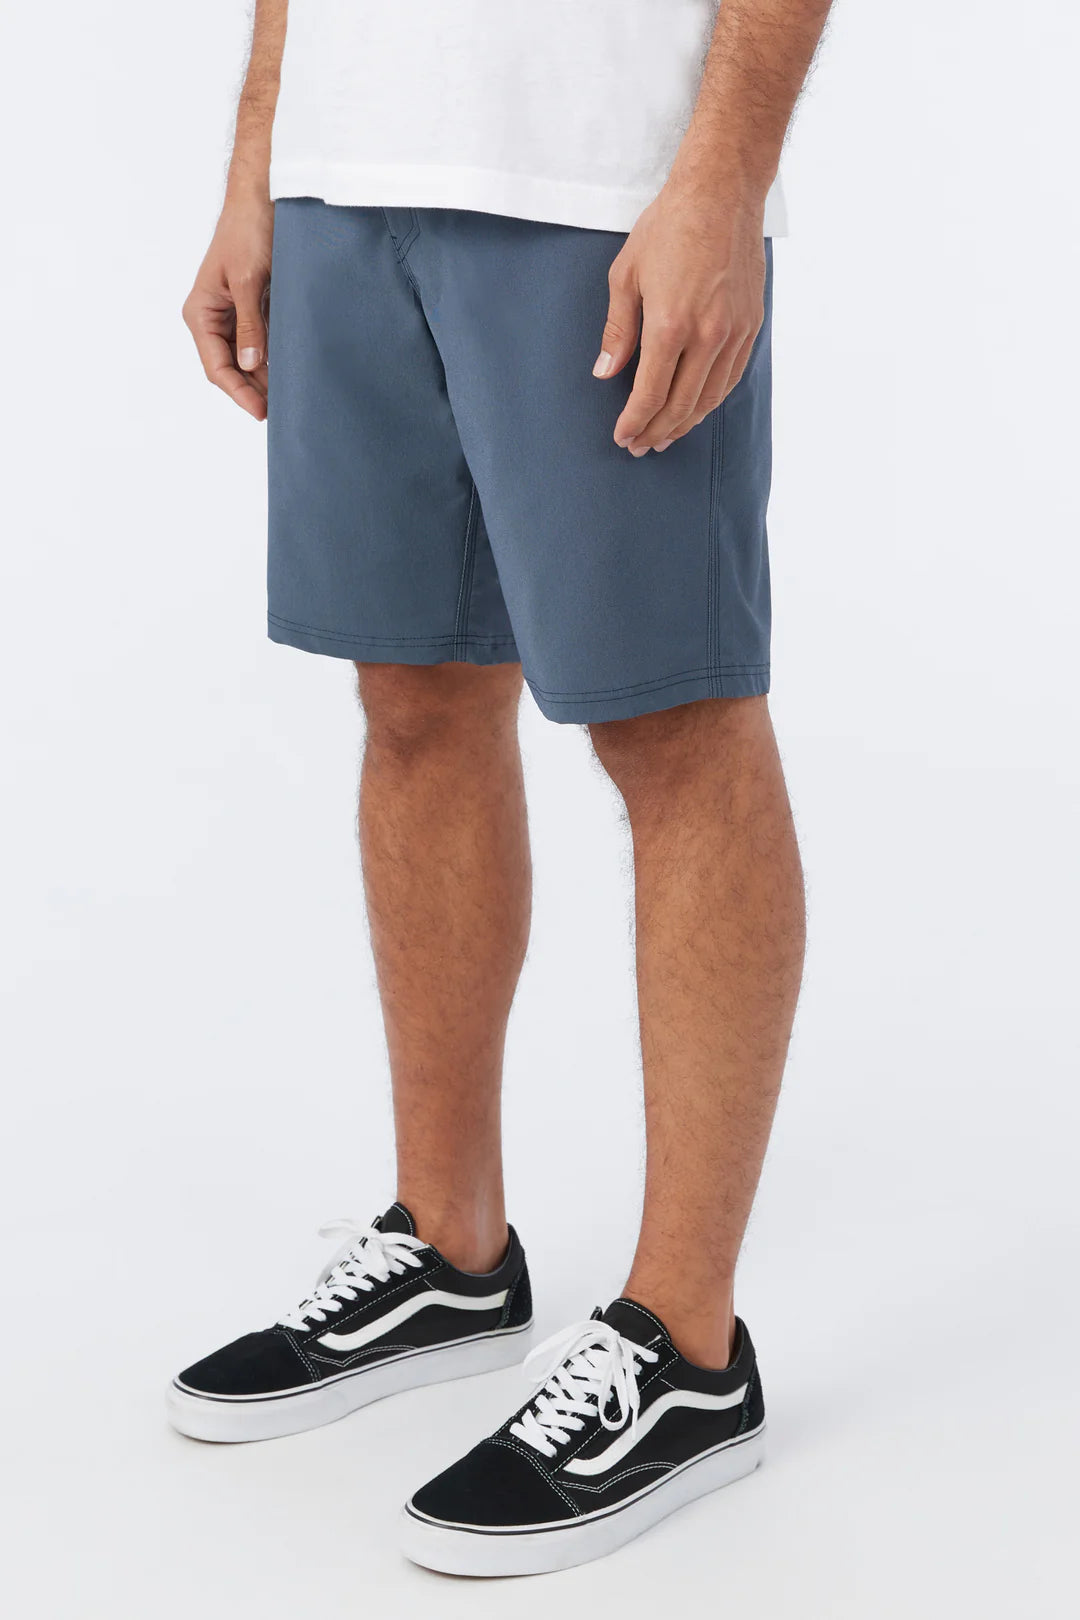 Oneill Men's Stockton 20" Hybrid Shorts - SoHa Surf Shop